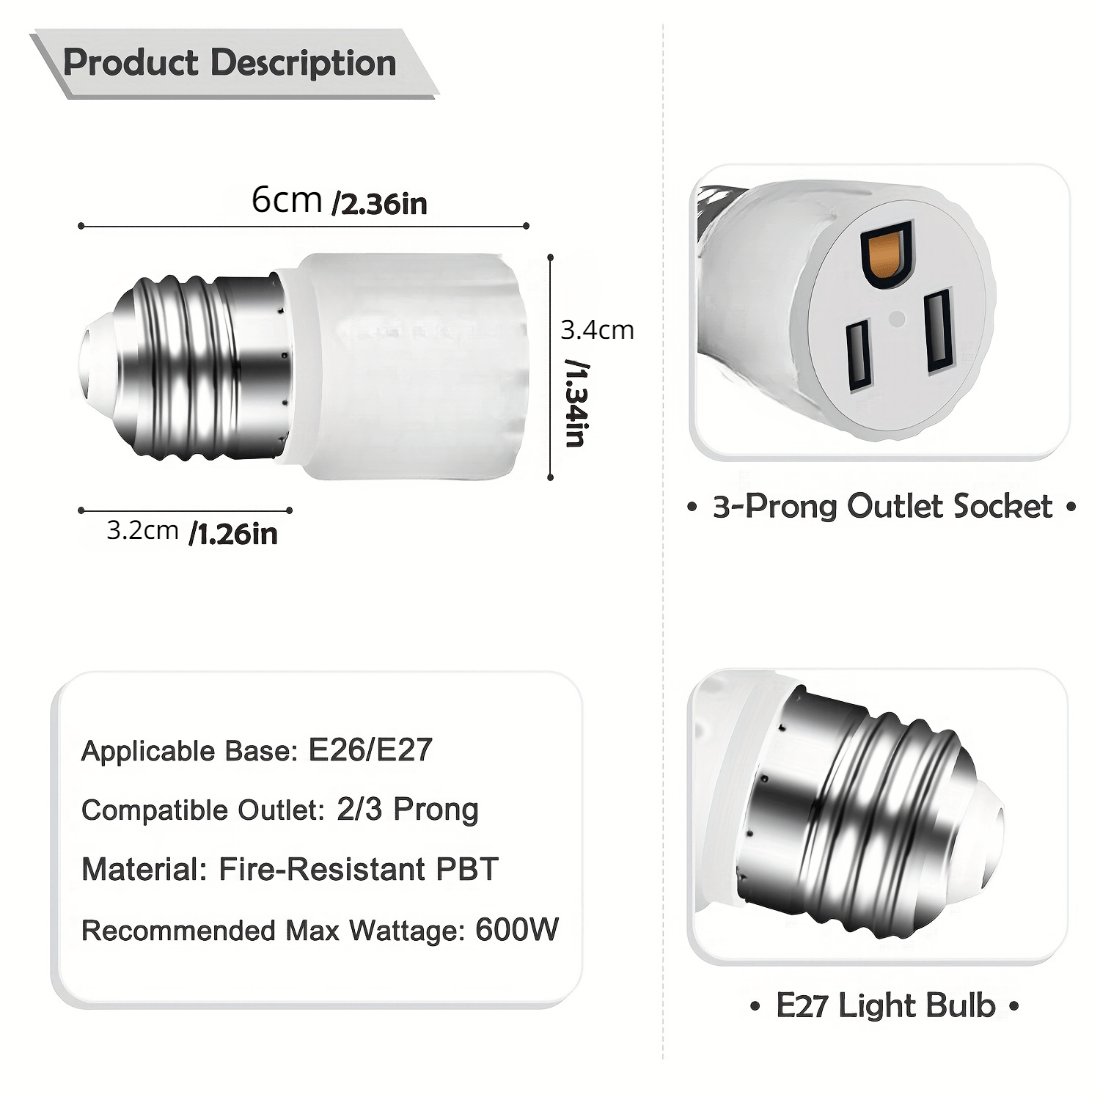 2 unids bombilla enchufe enchufe lámpara soporte adaptador de enchufe de  luz toma de luz enchufe adaptador de enchufe temporizador bombilla lámpara